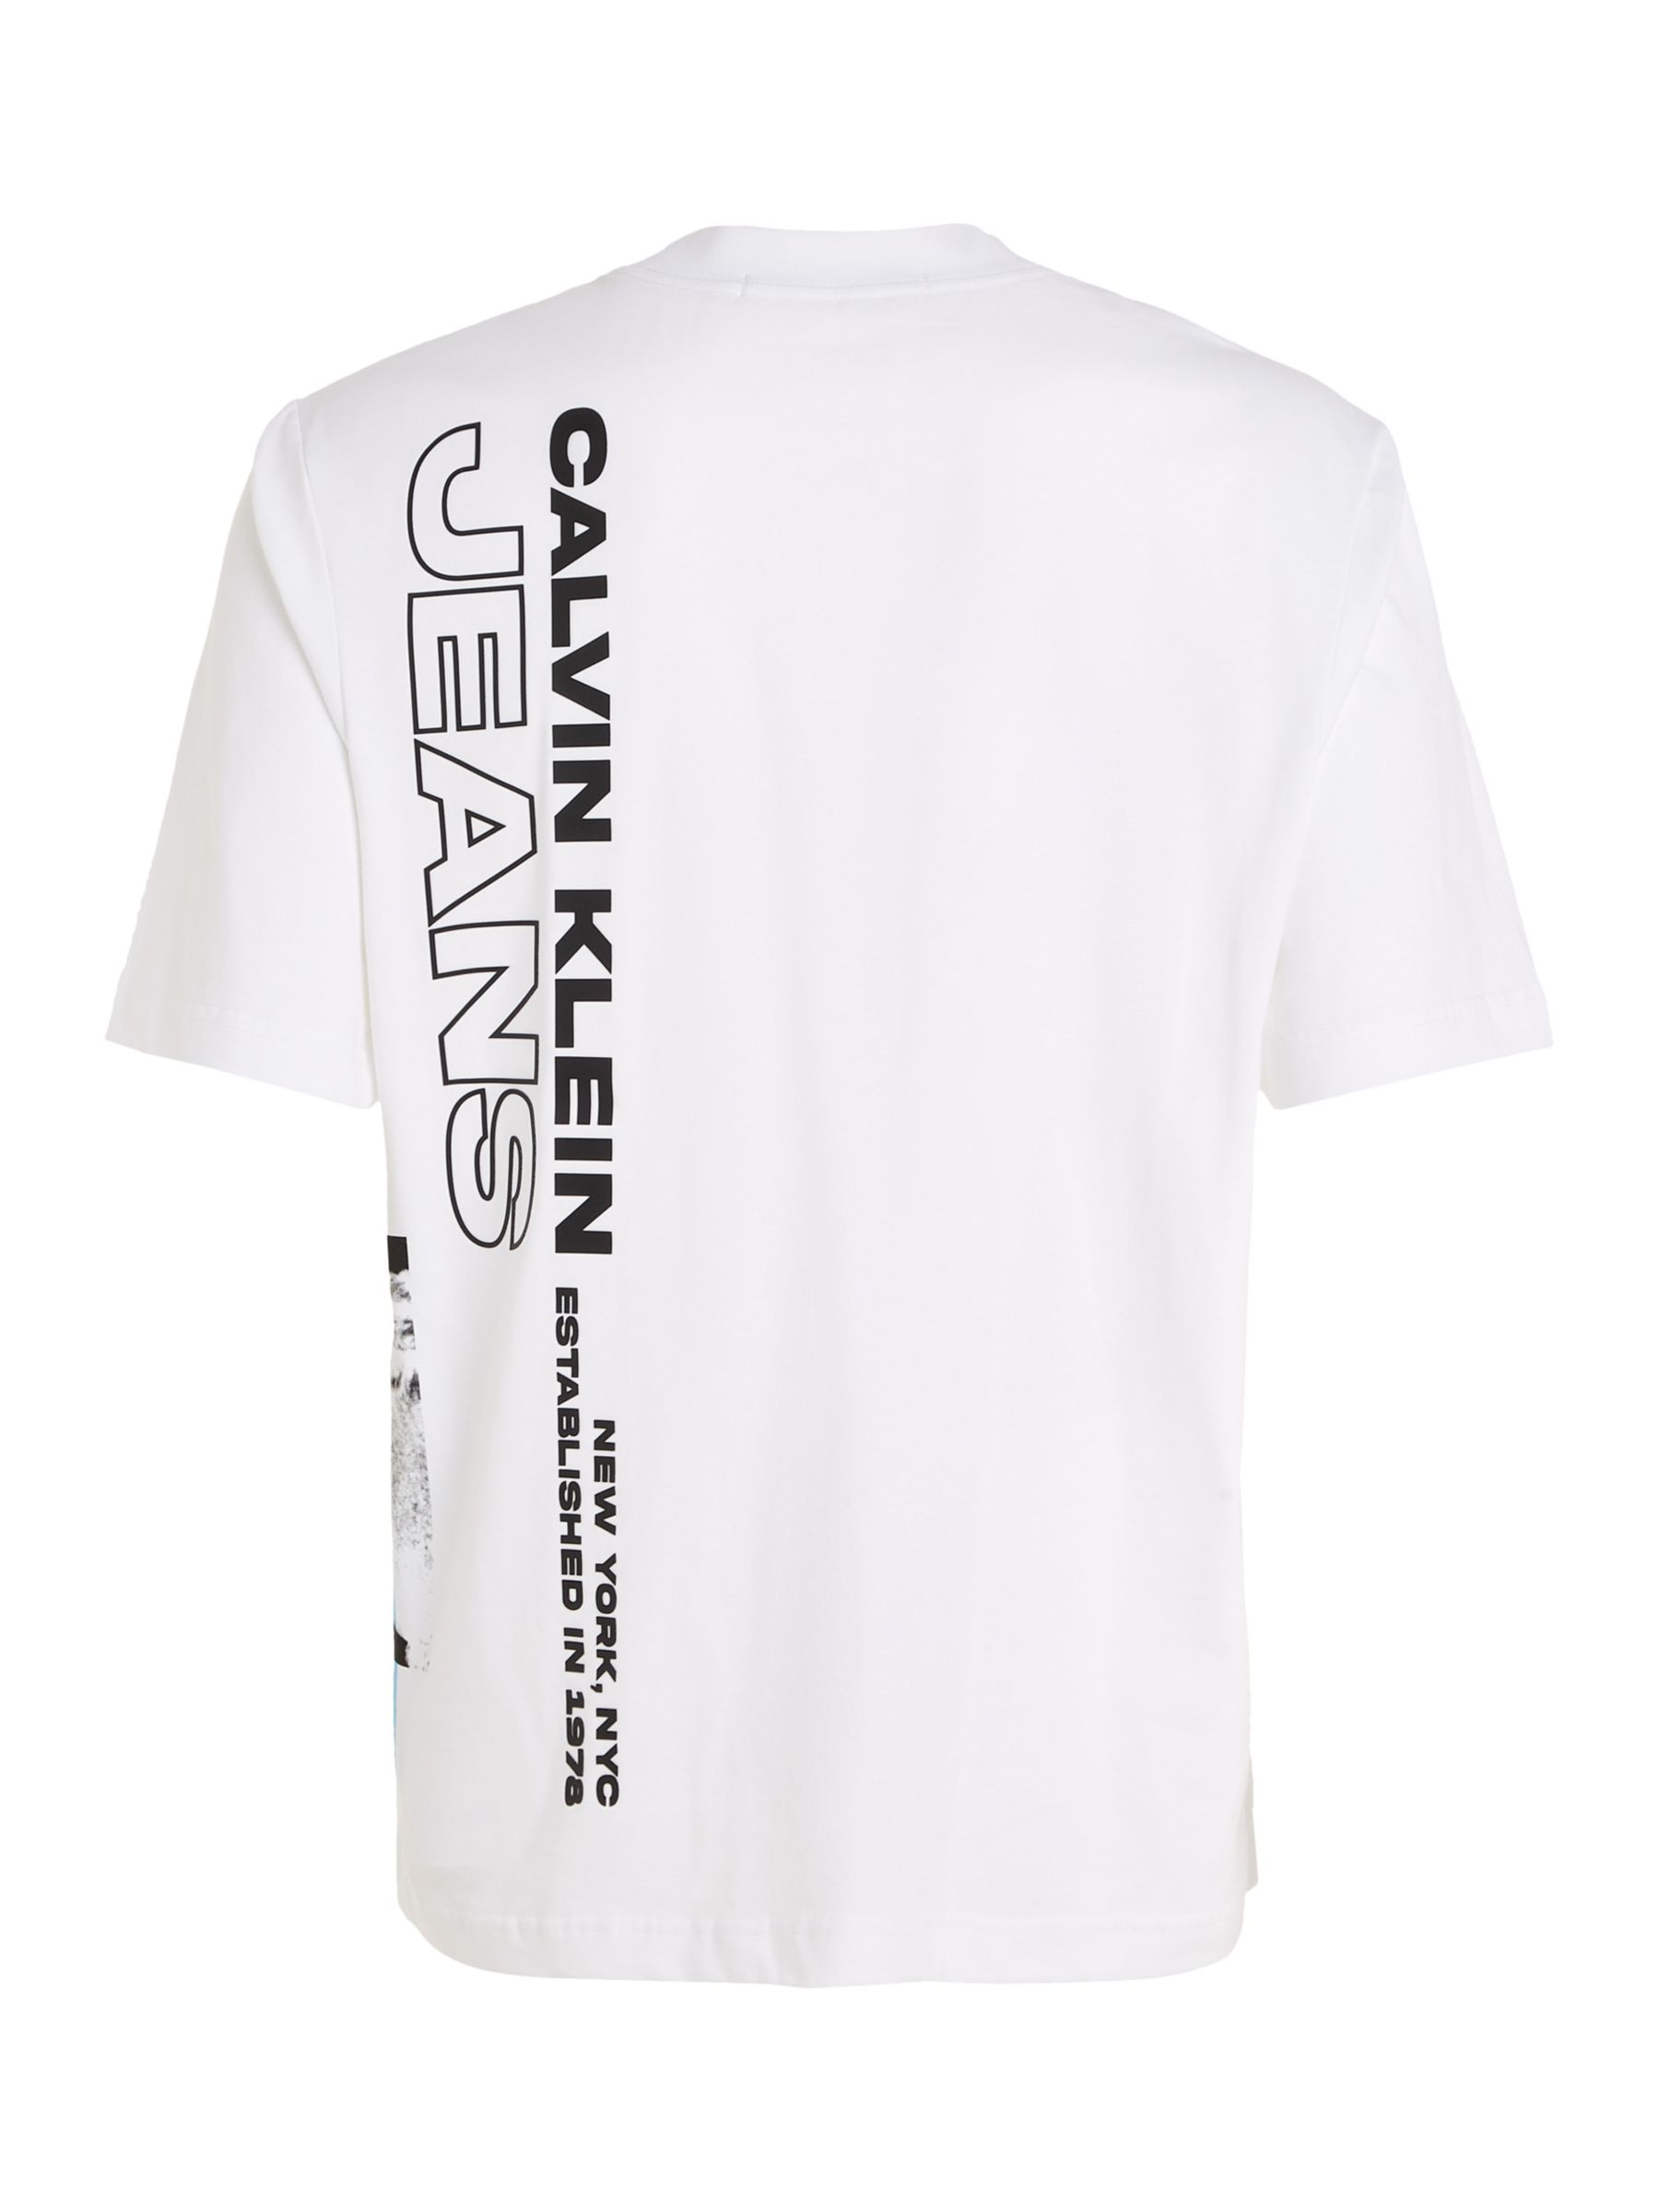 Calvin Klein Jeans NYC Print T-Shirt, Bright White, XS